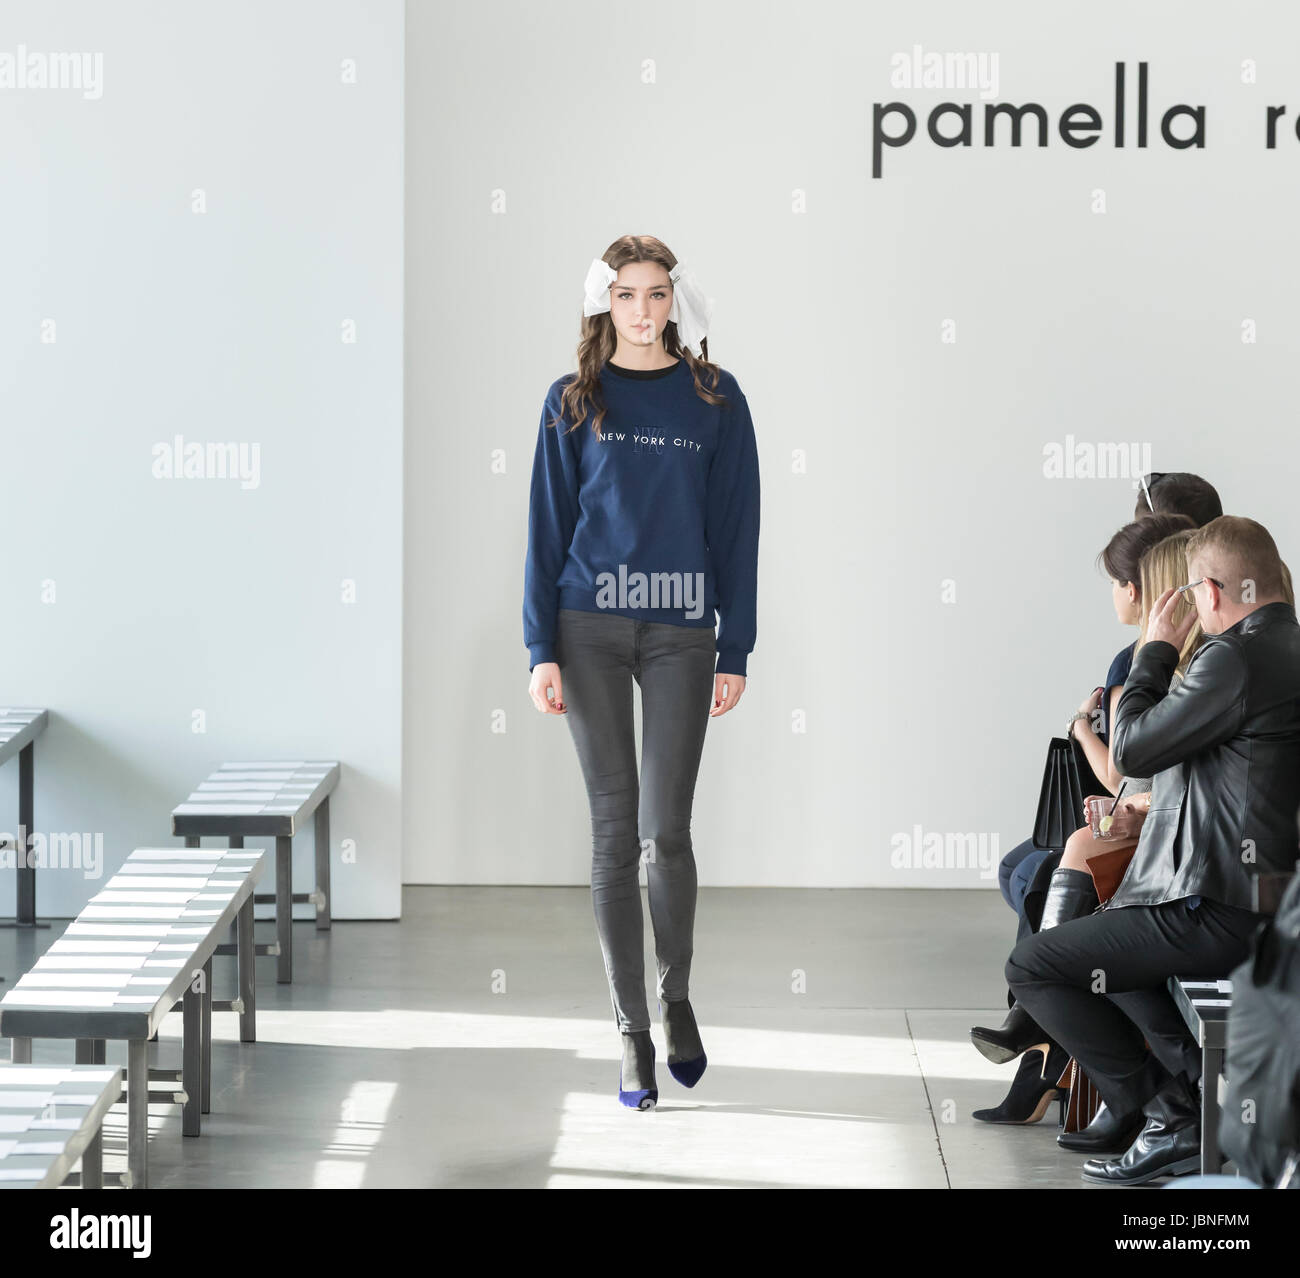 NEW YORK, NY - FEBRUARY 10, 2017: Sandra Brinza walks the runway during rehearsal for the Pamella Roland Fall Winter 2017 fashion show during New York Stock Photo